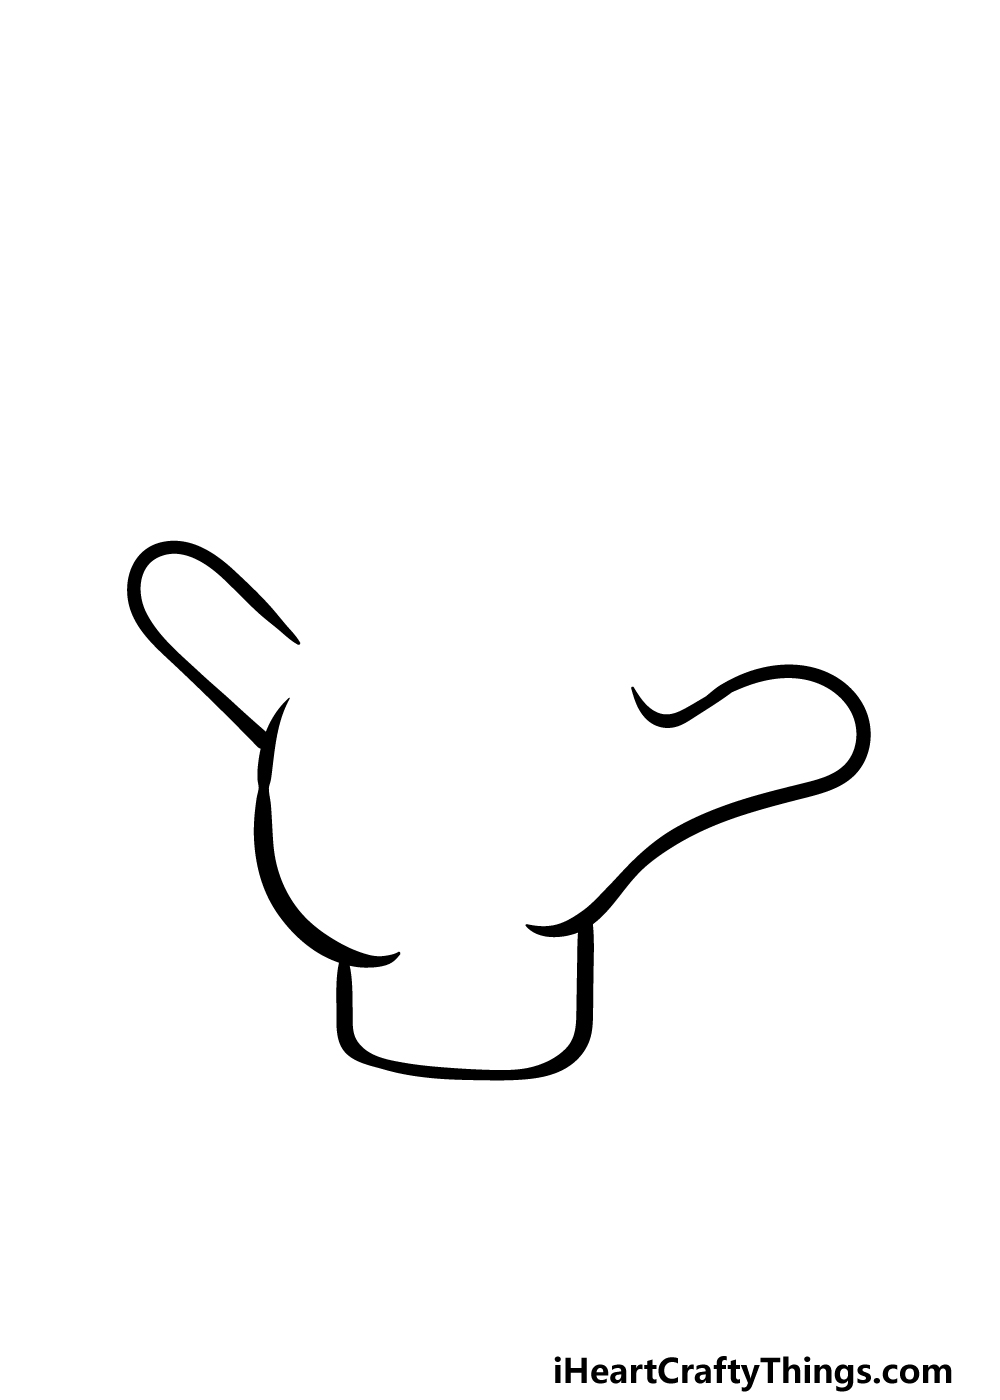 how to draw a cartoon hand step 1